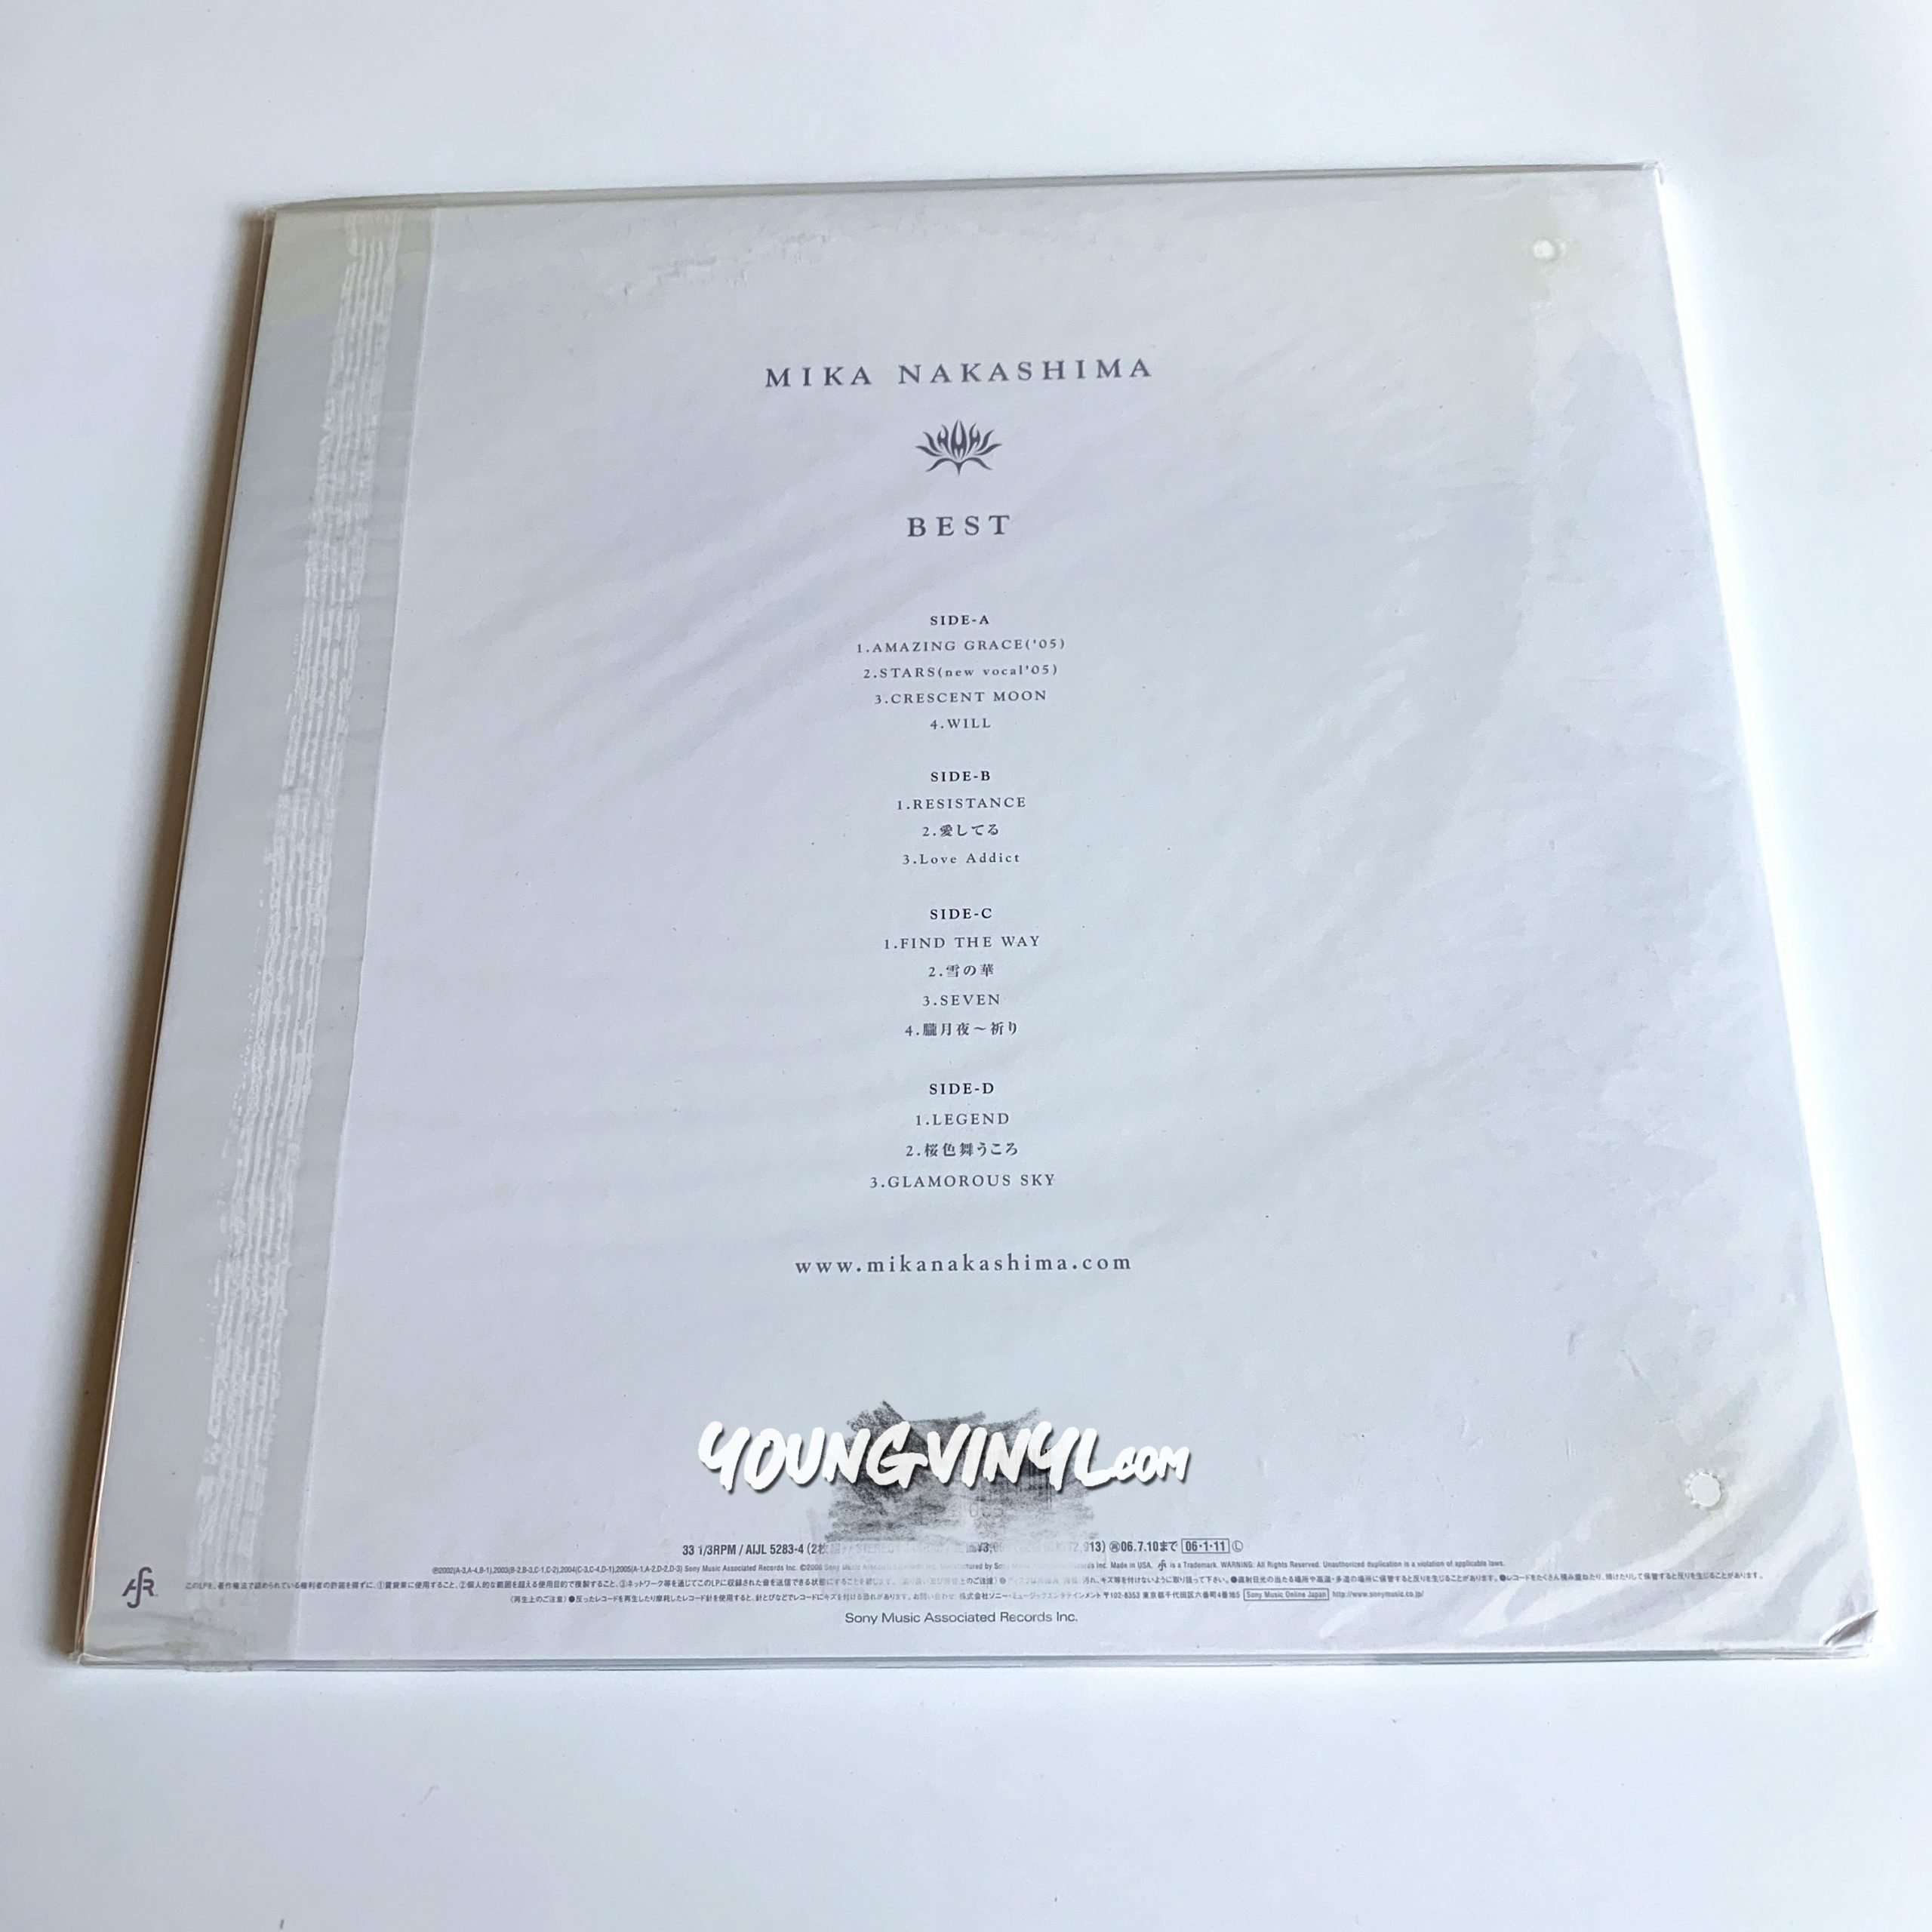 中島美嘉Mika Nakashima Best Vinyl 2LP - Young Vinyl